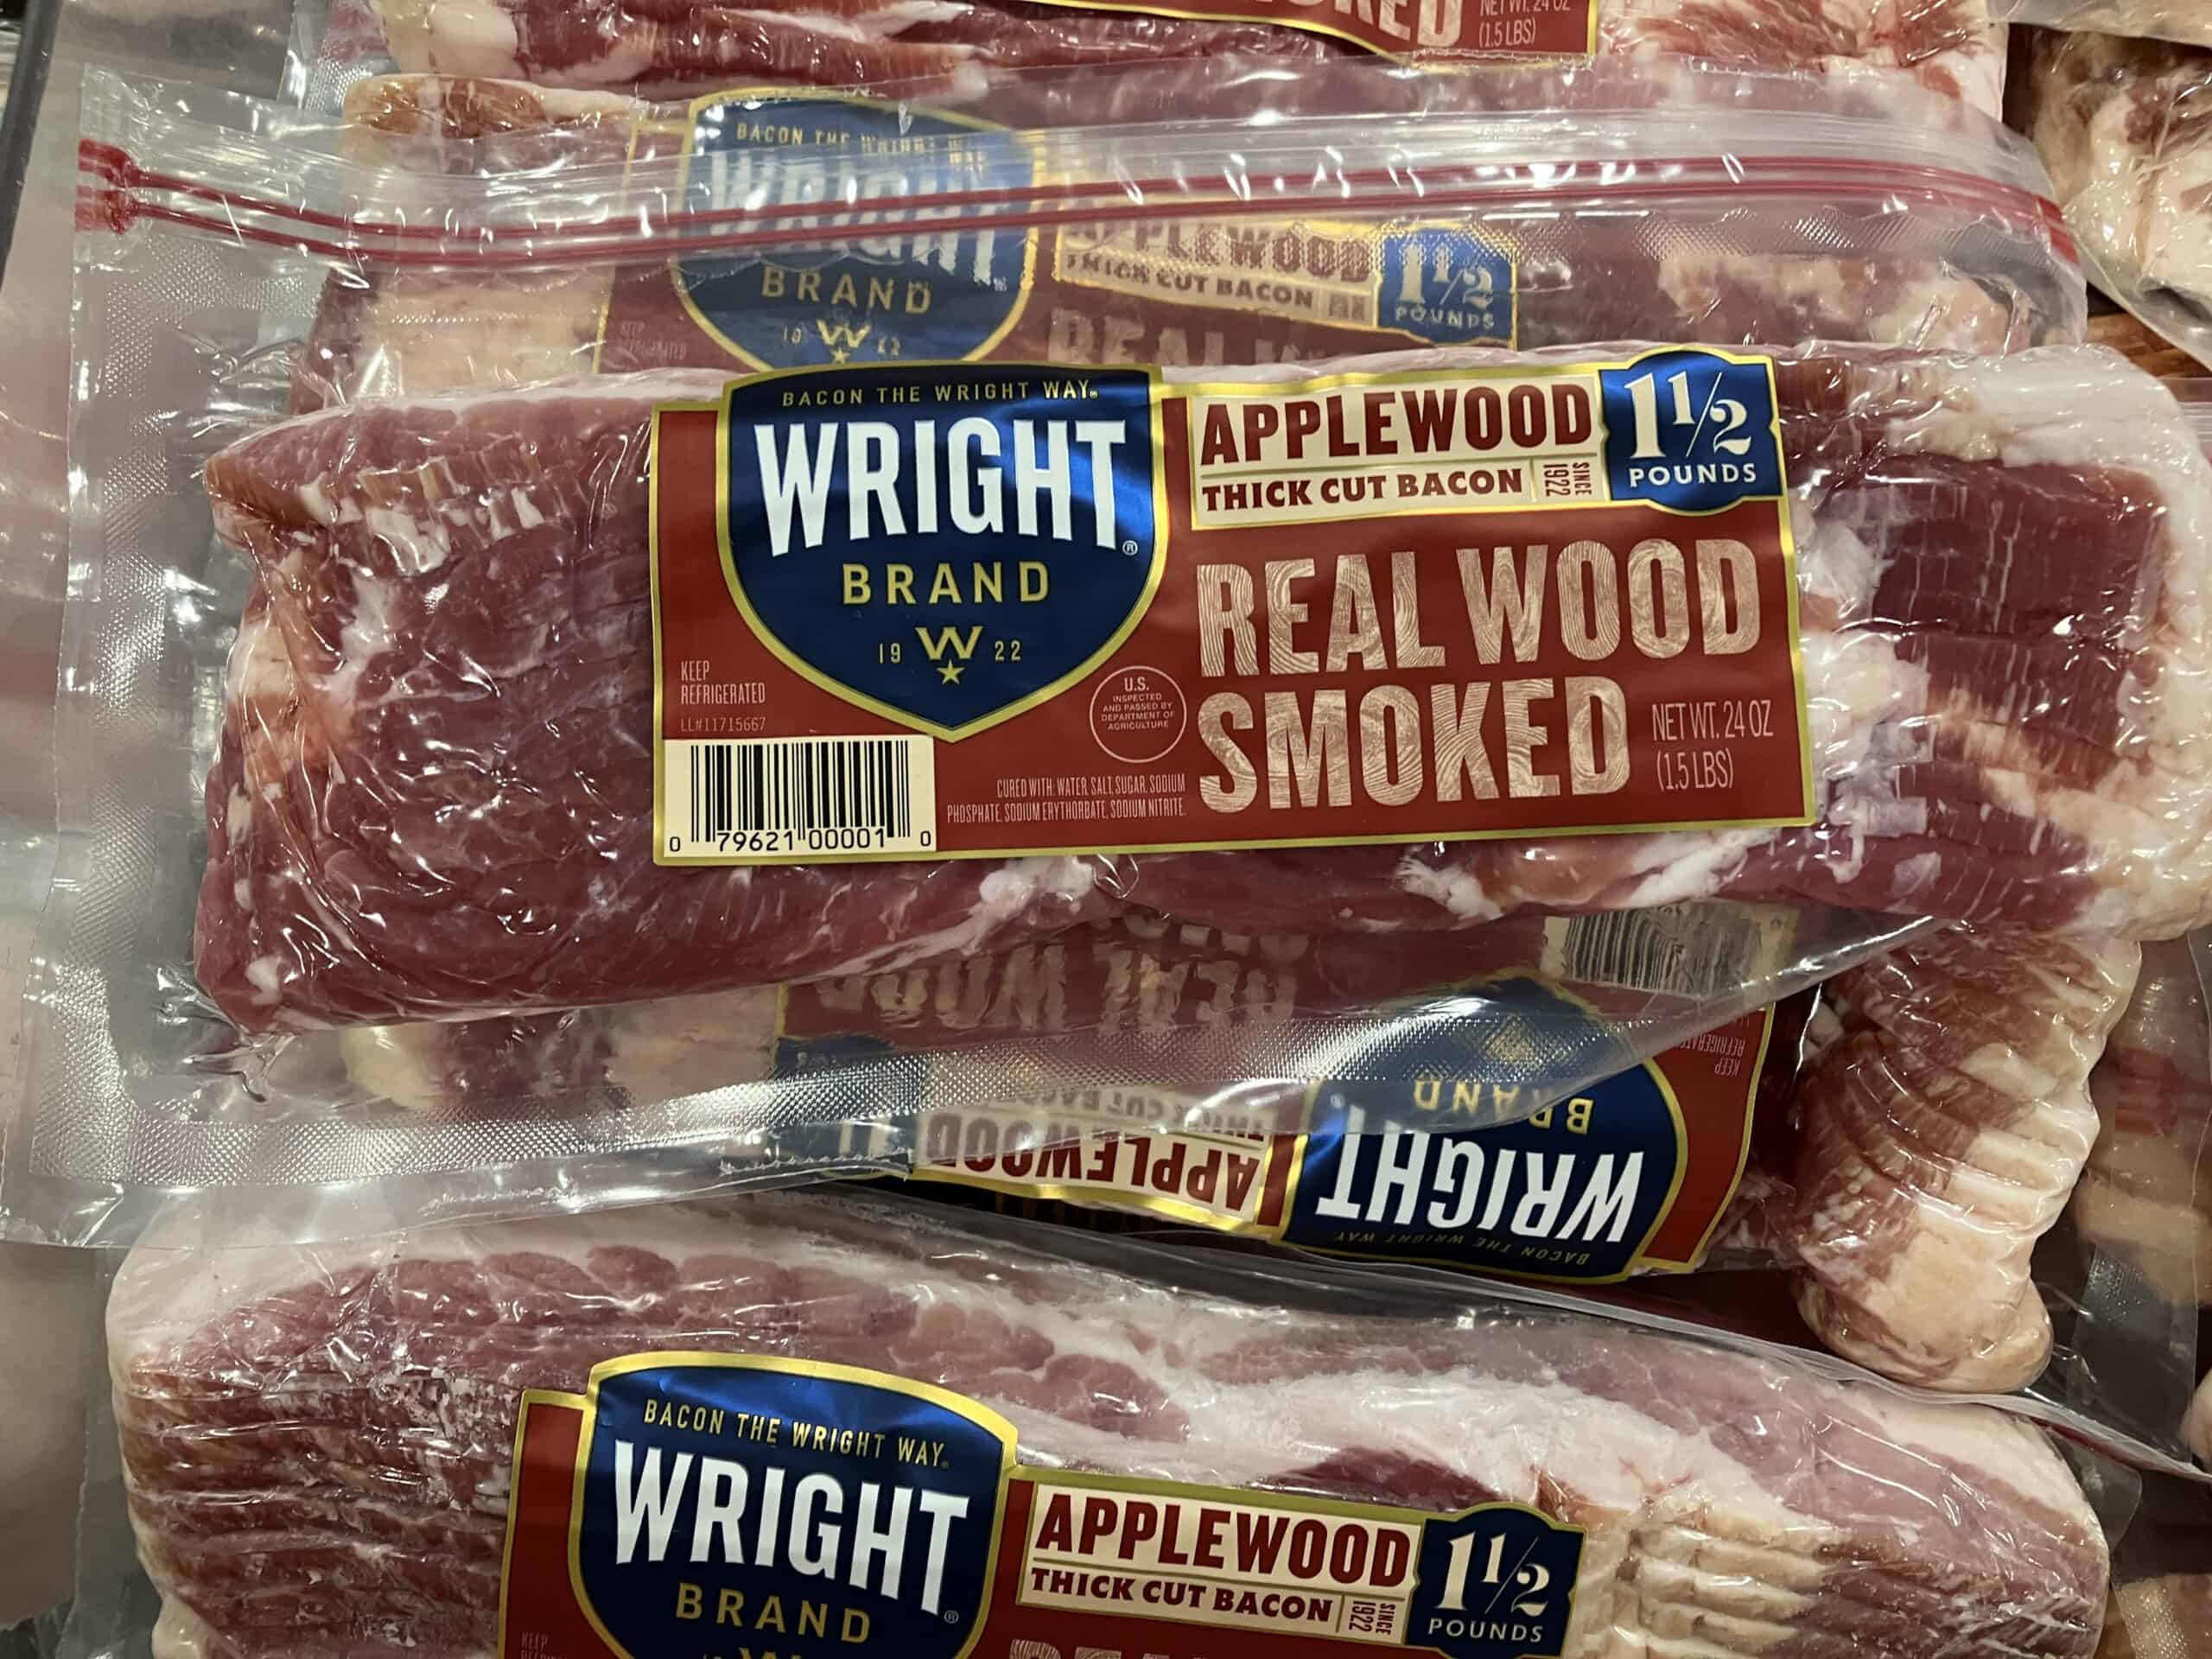 Wright Brand Applewood Smoked bacon